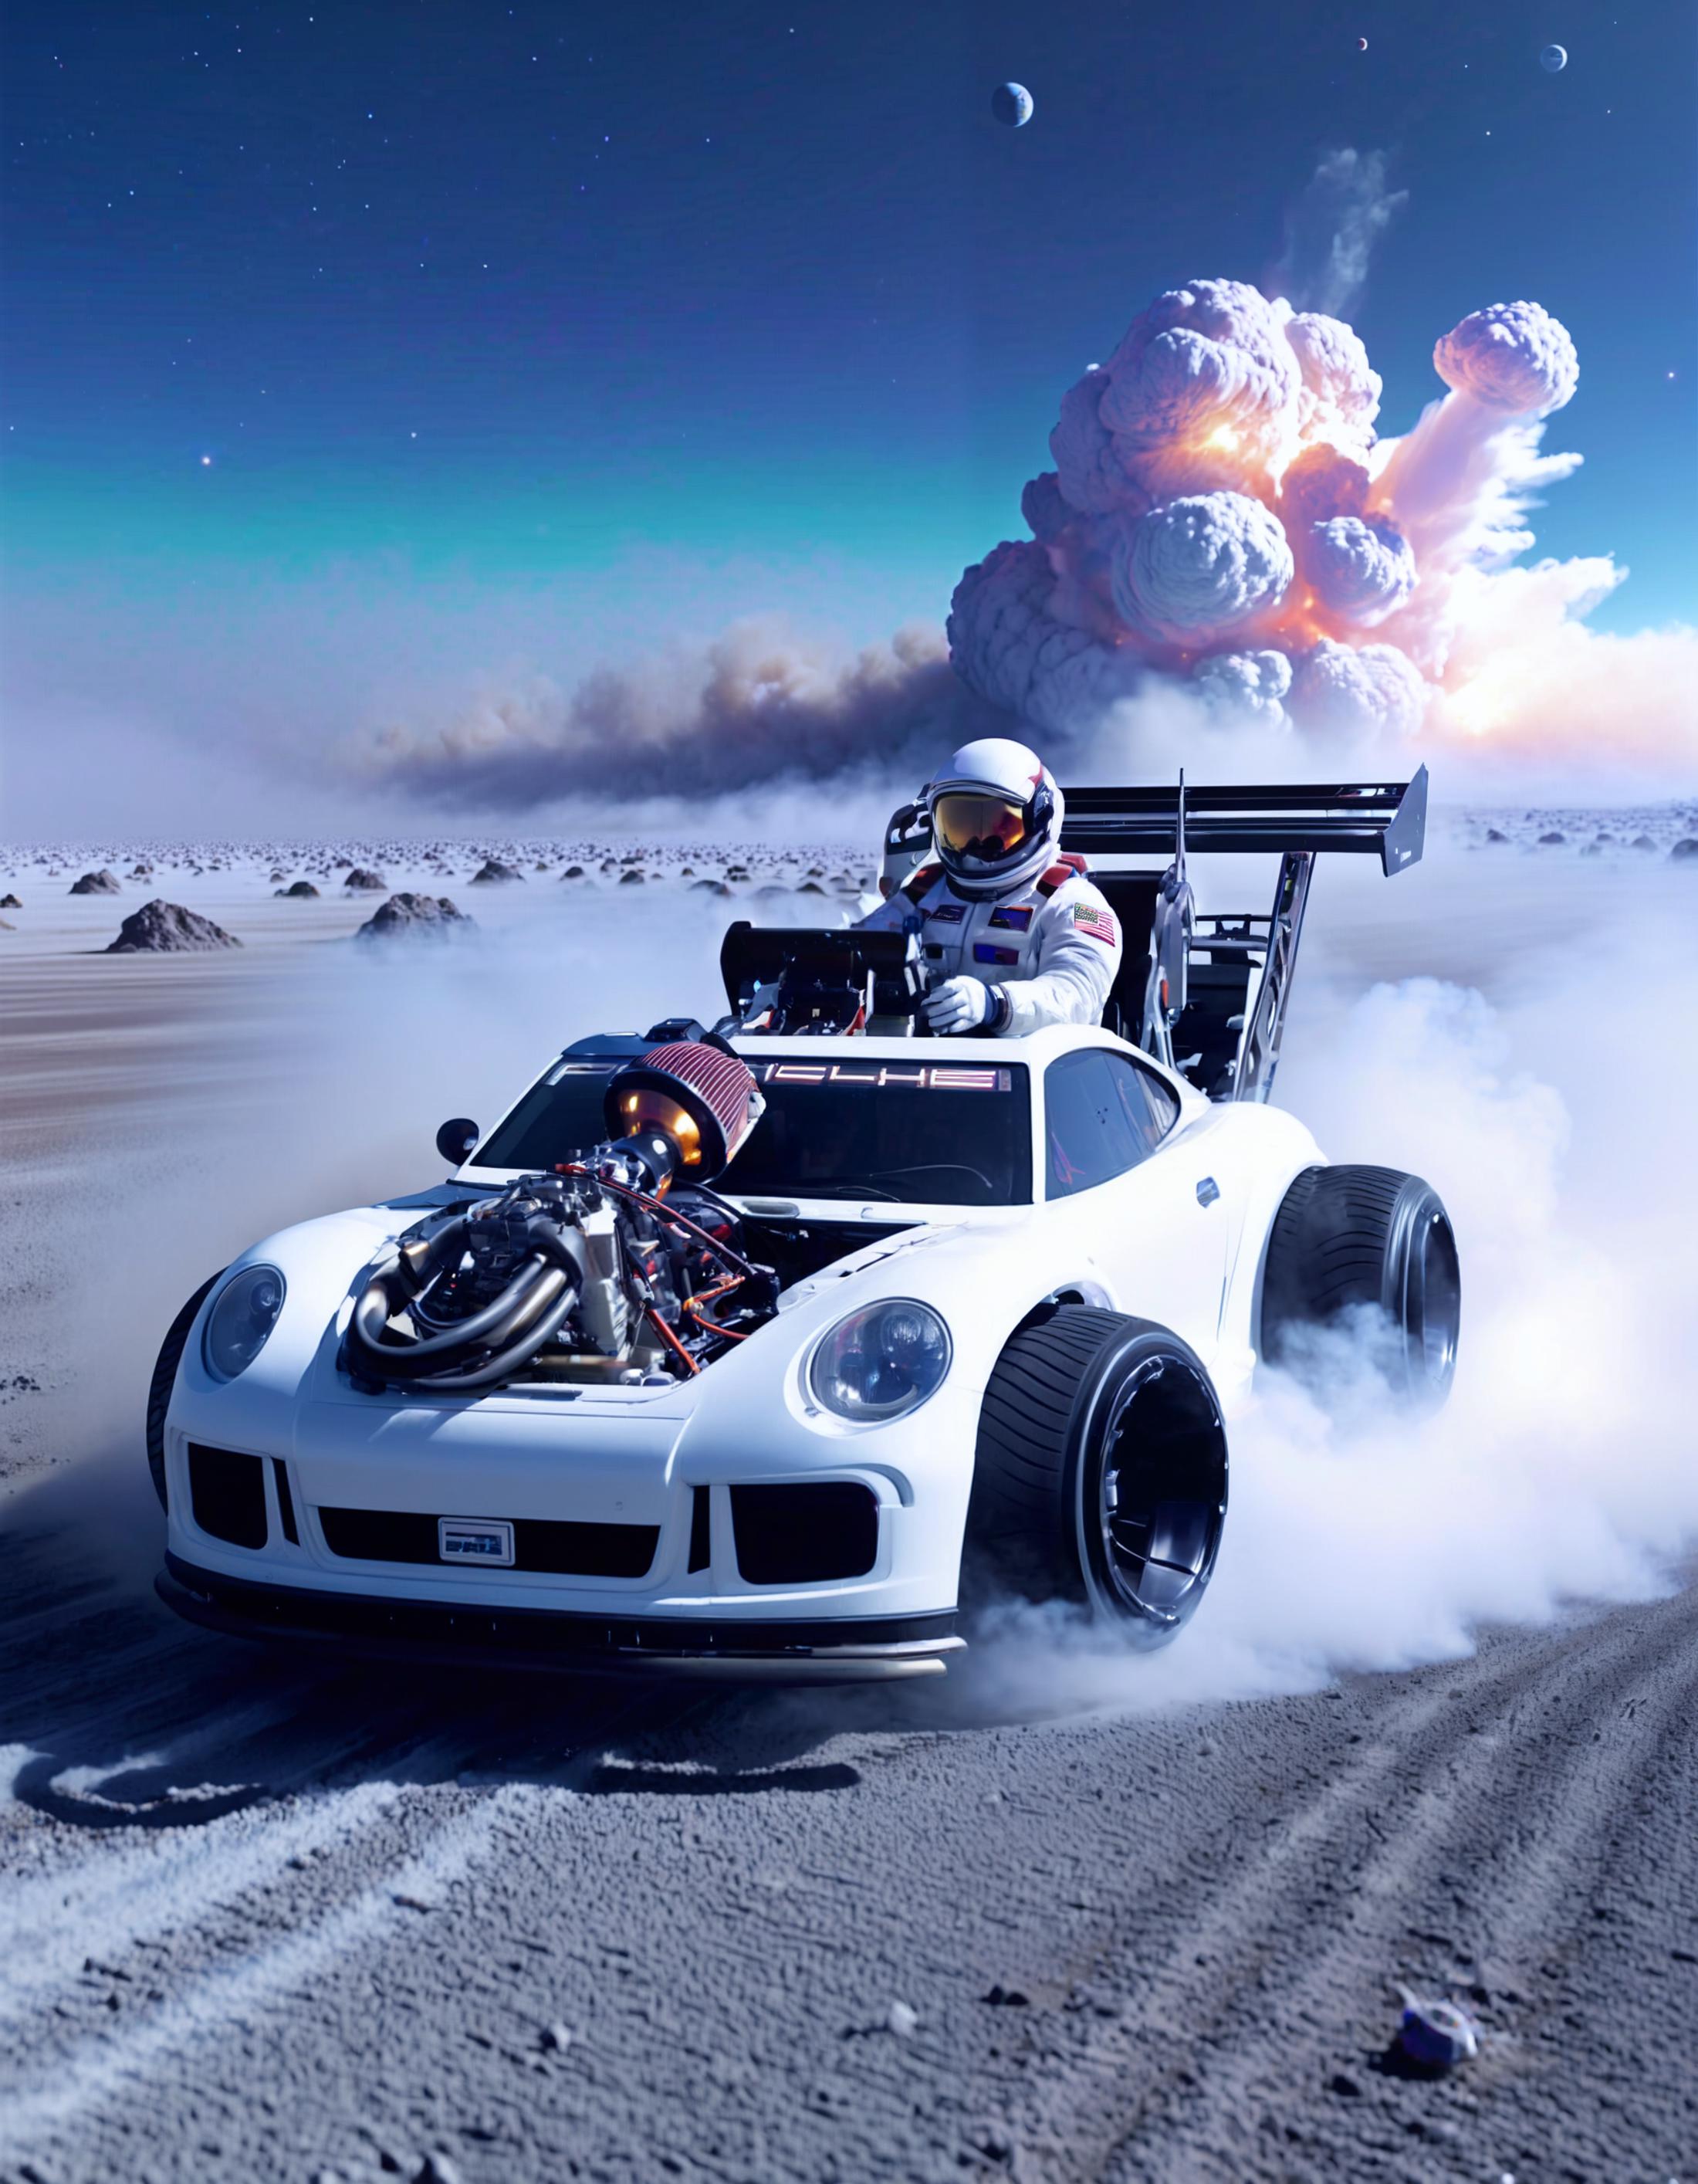 Porsche GTS3 Mini Monster Turbo Supercharger [SDXL] image by denrakeiw